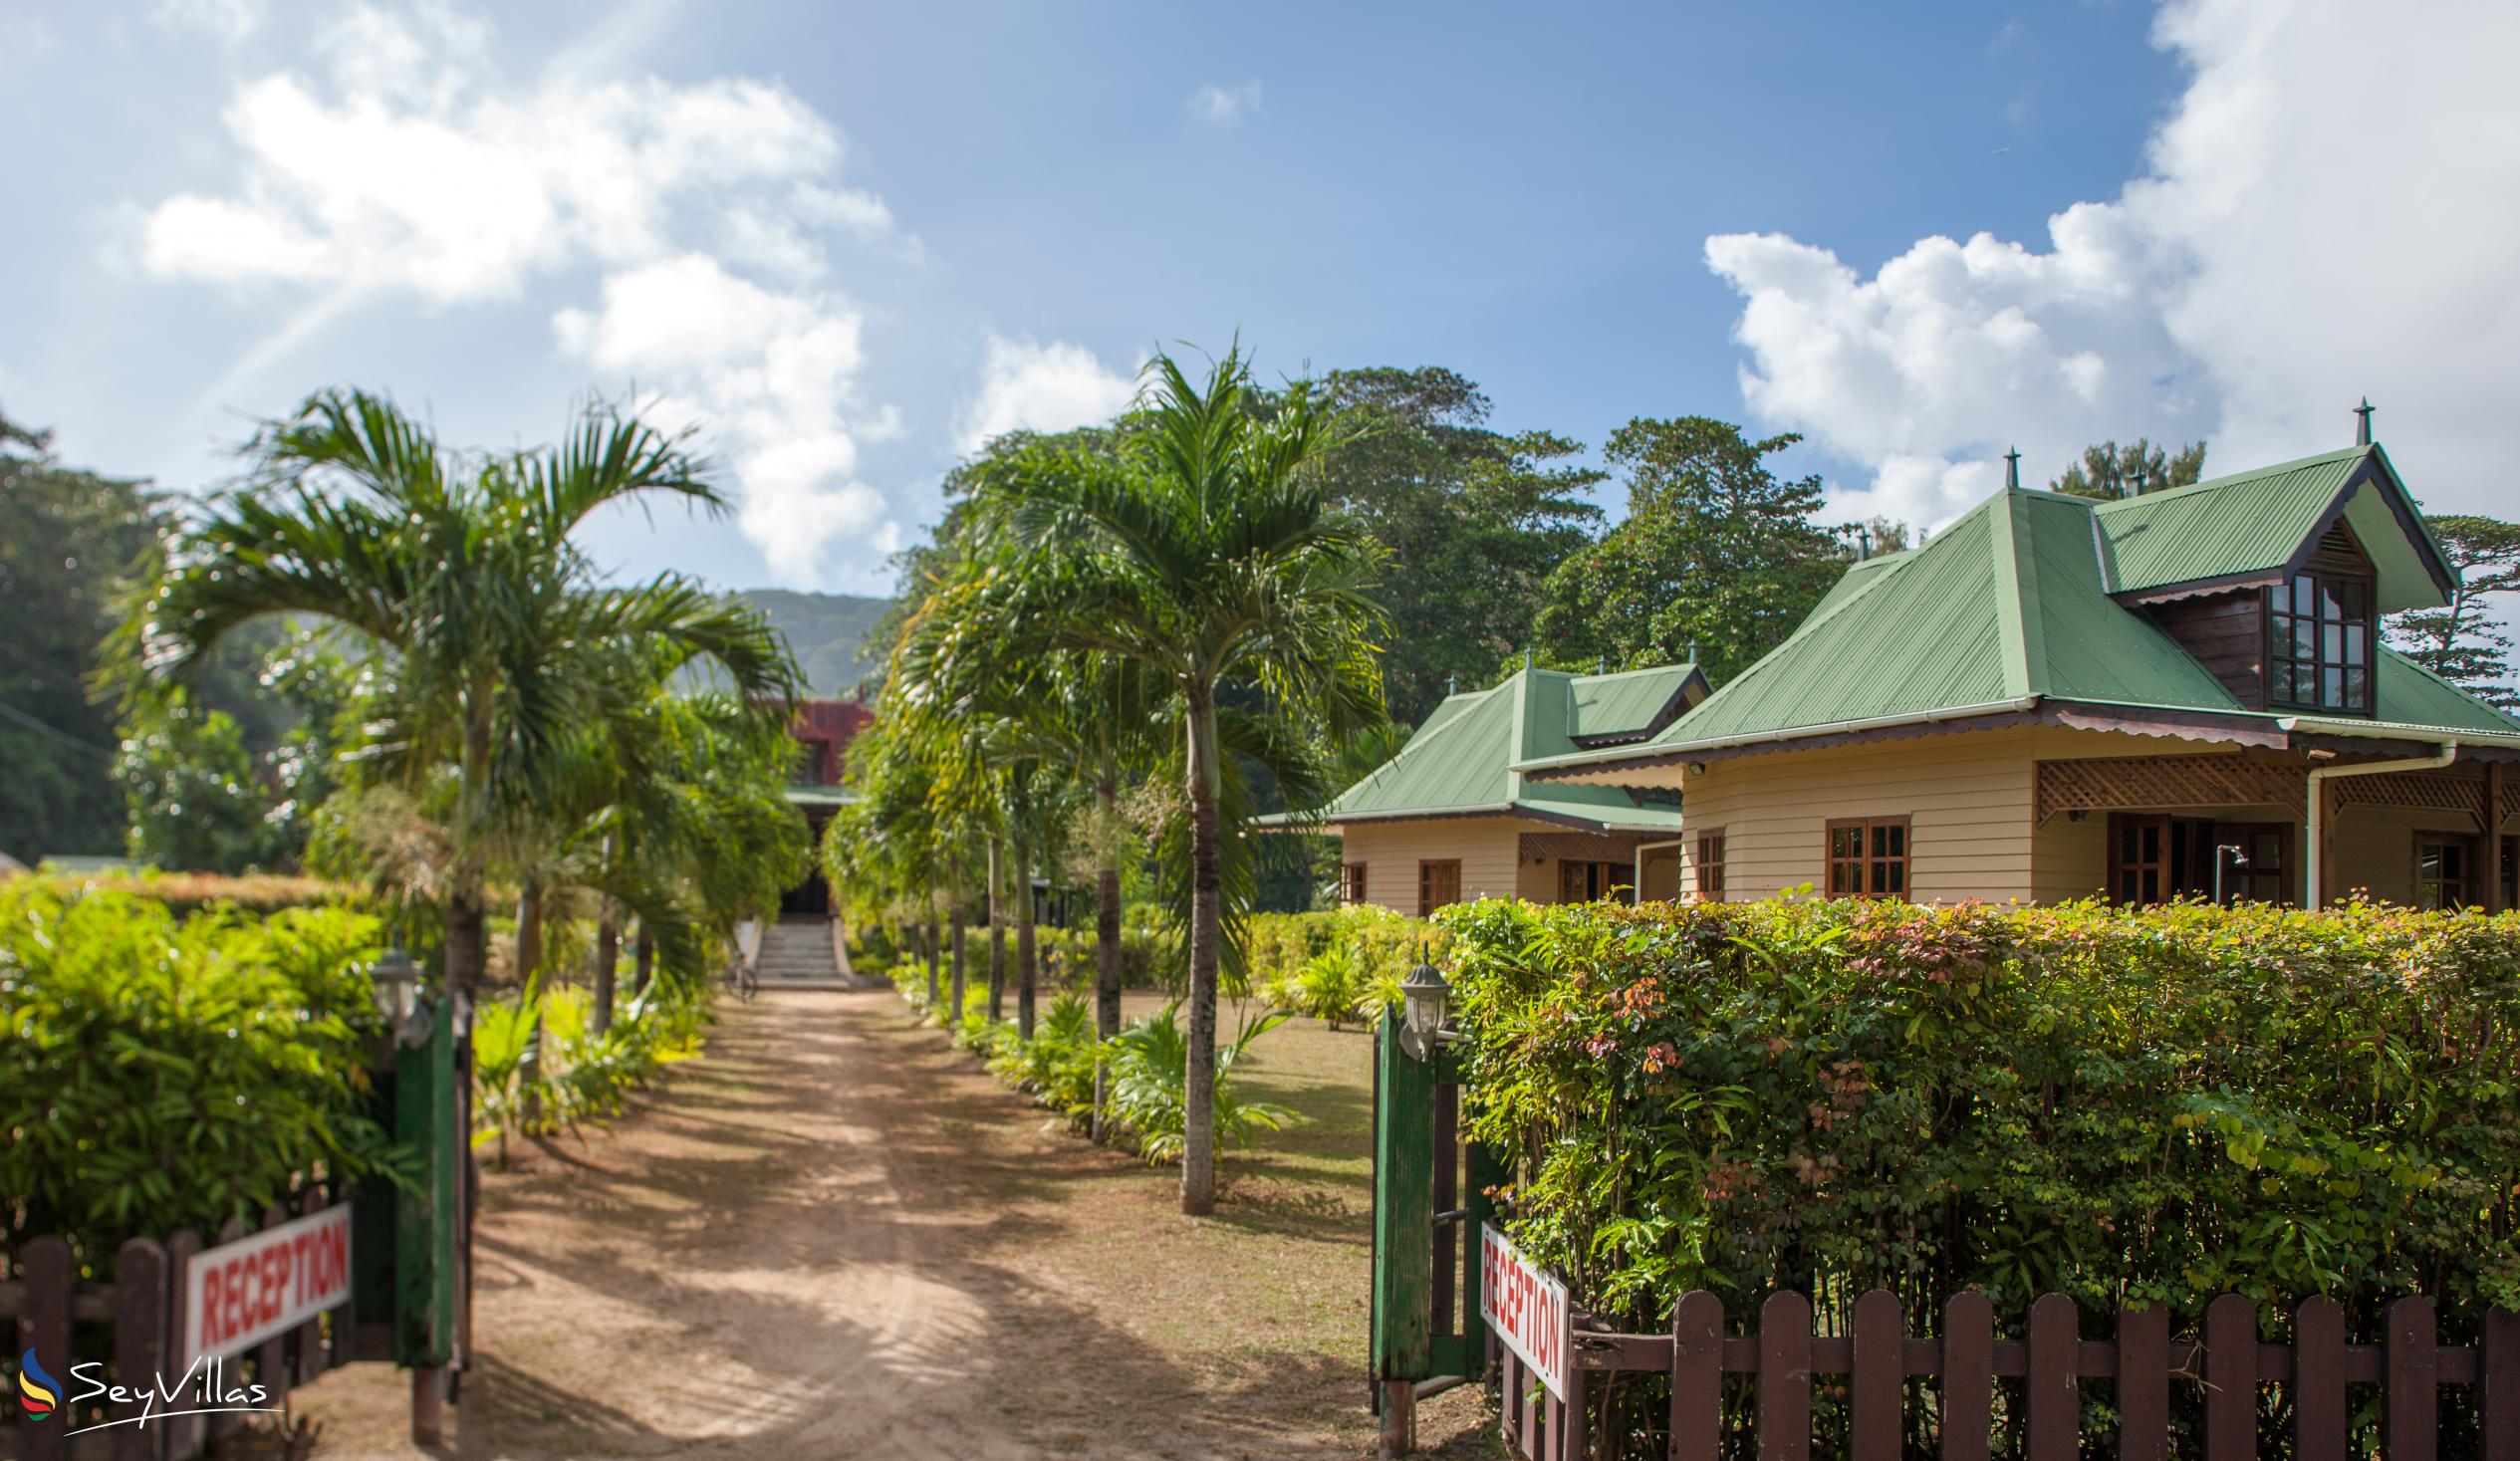 Foto 2: Villa Creole - Aussenbereich - La Digue (Seychellen)